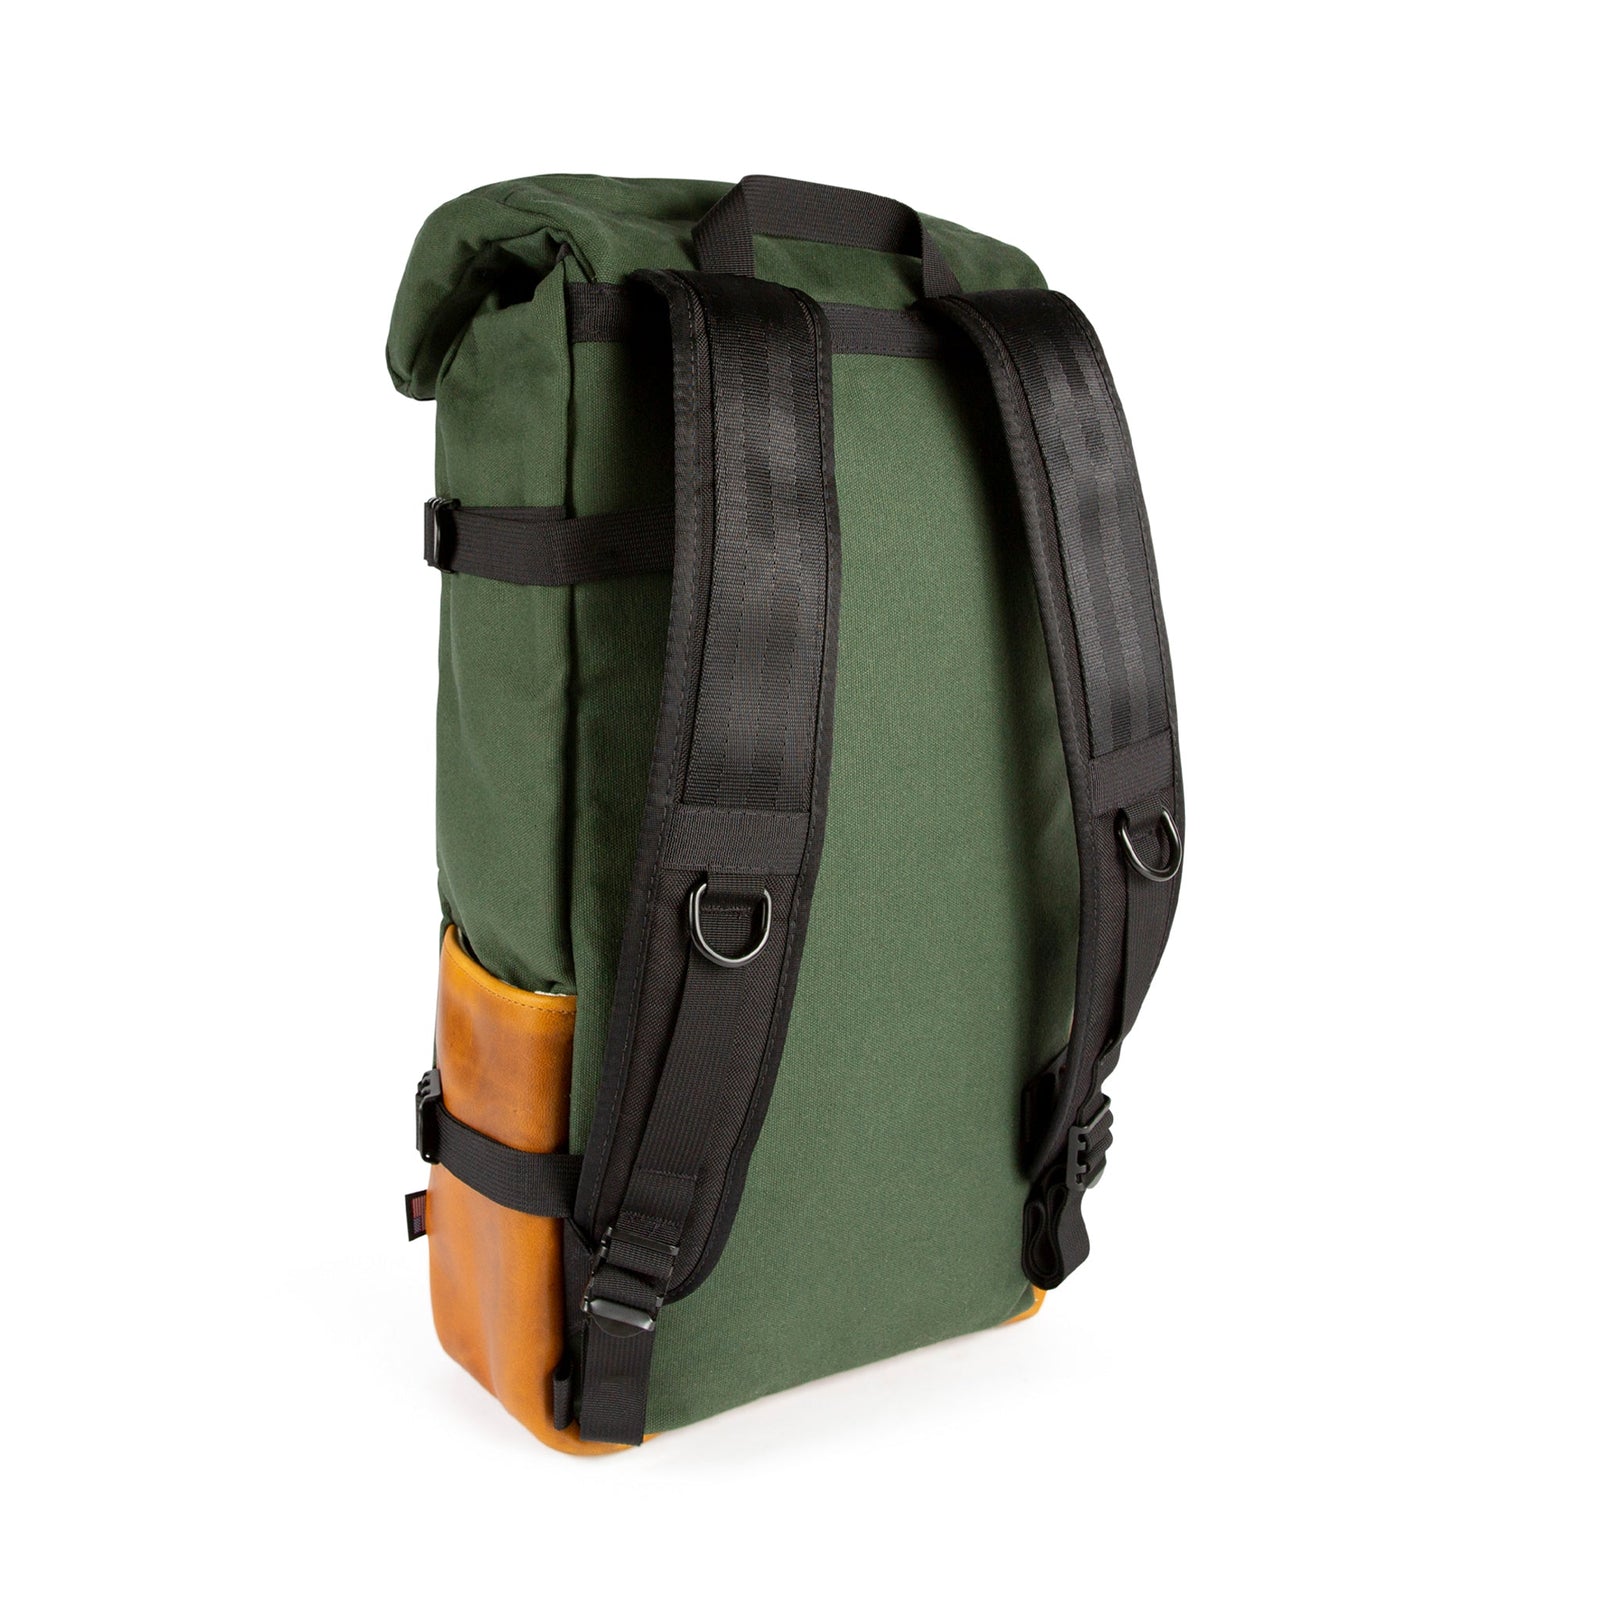 General back shot of Topo Designs Klettersack Heritage Canvas Made in USA backpack in Olive green Canvas / Brown Leather showing shoulder straps.